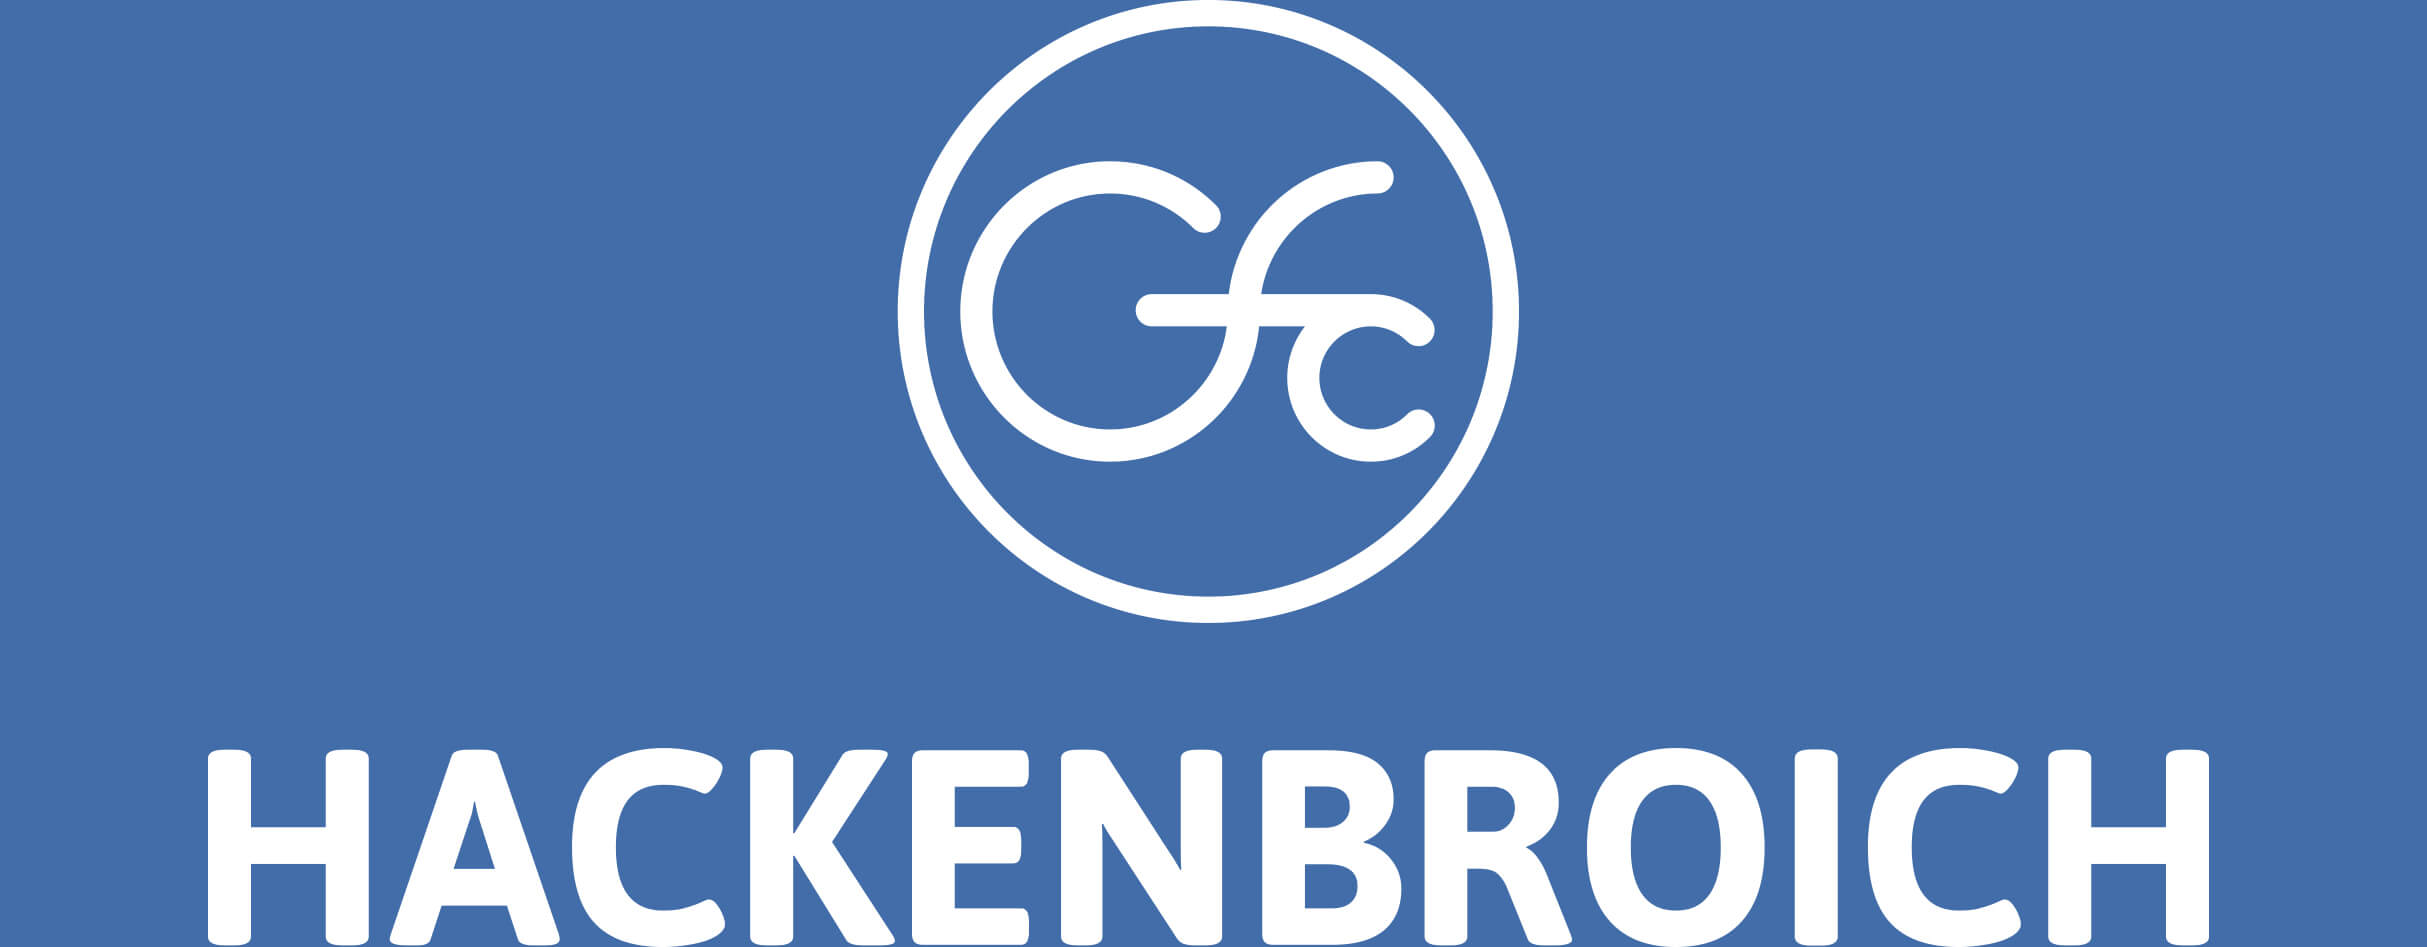 Hackenbroich GmbH Logo